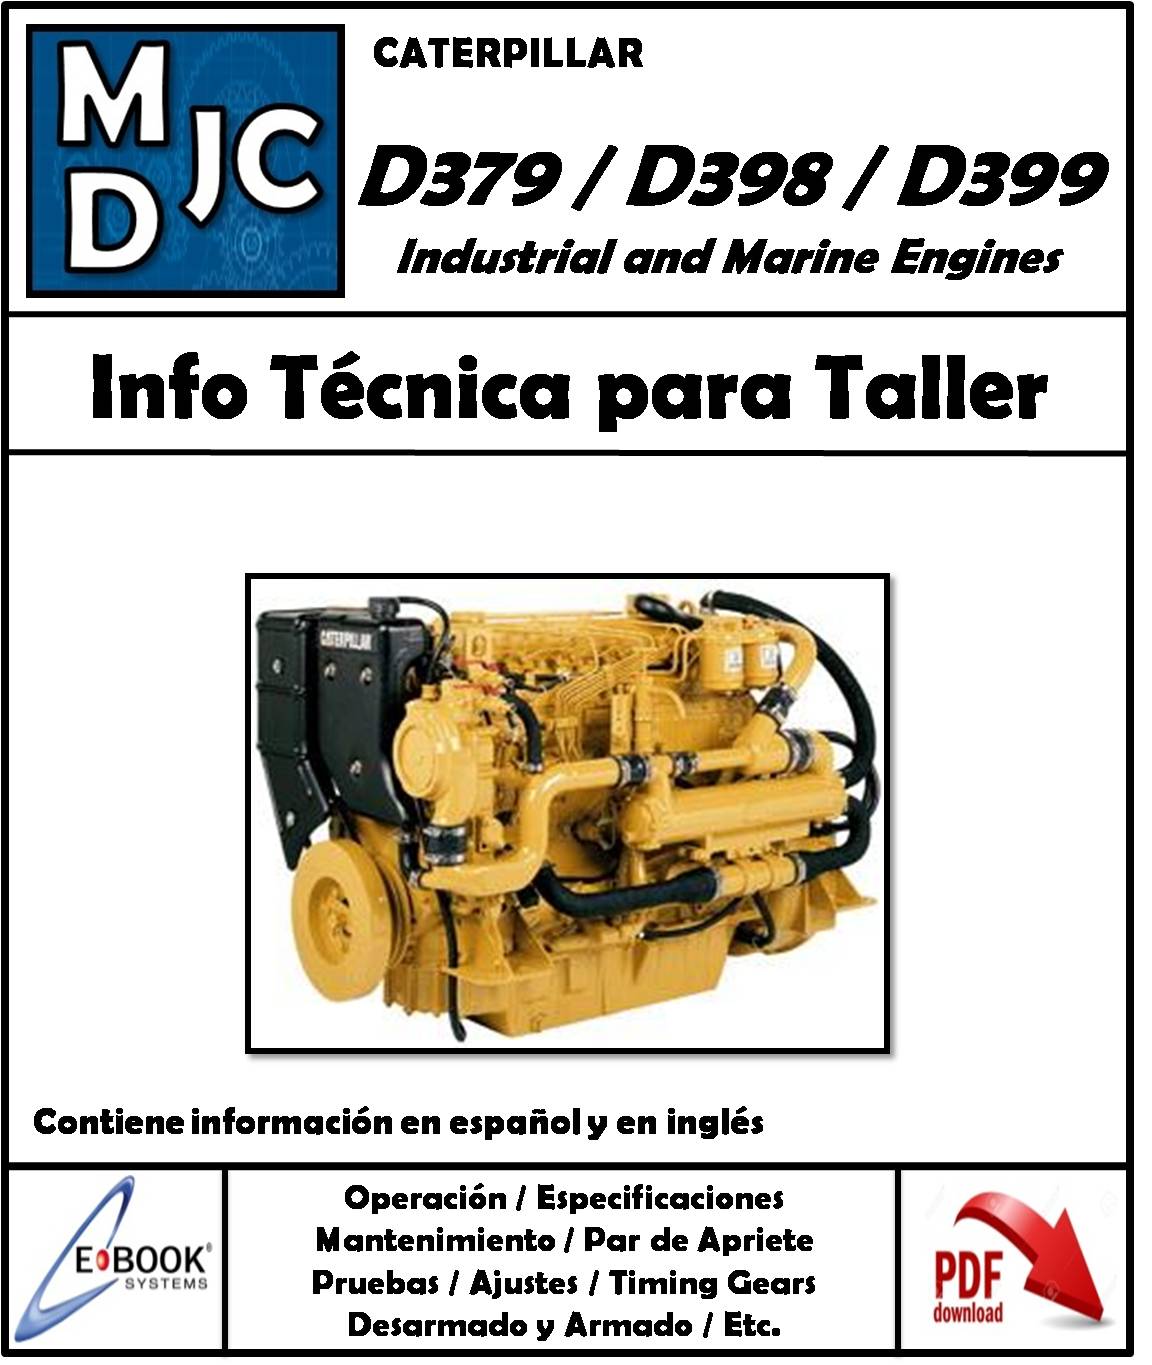 Manual de Información Técnica para Taller Motor Caterpillar  D379 / D398 / D399